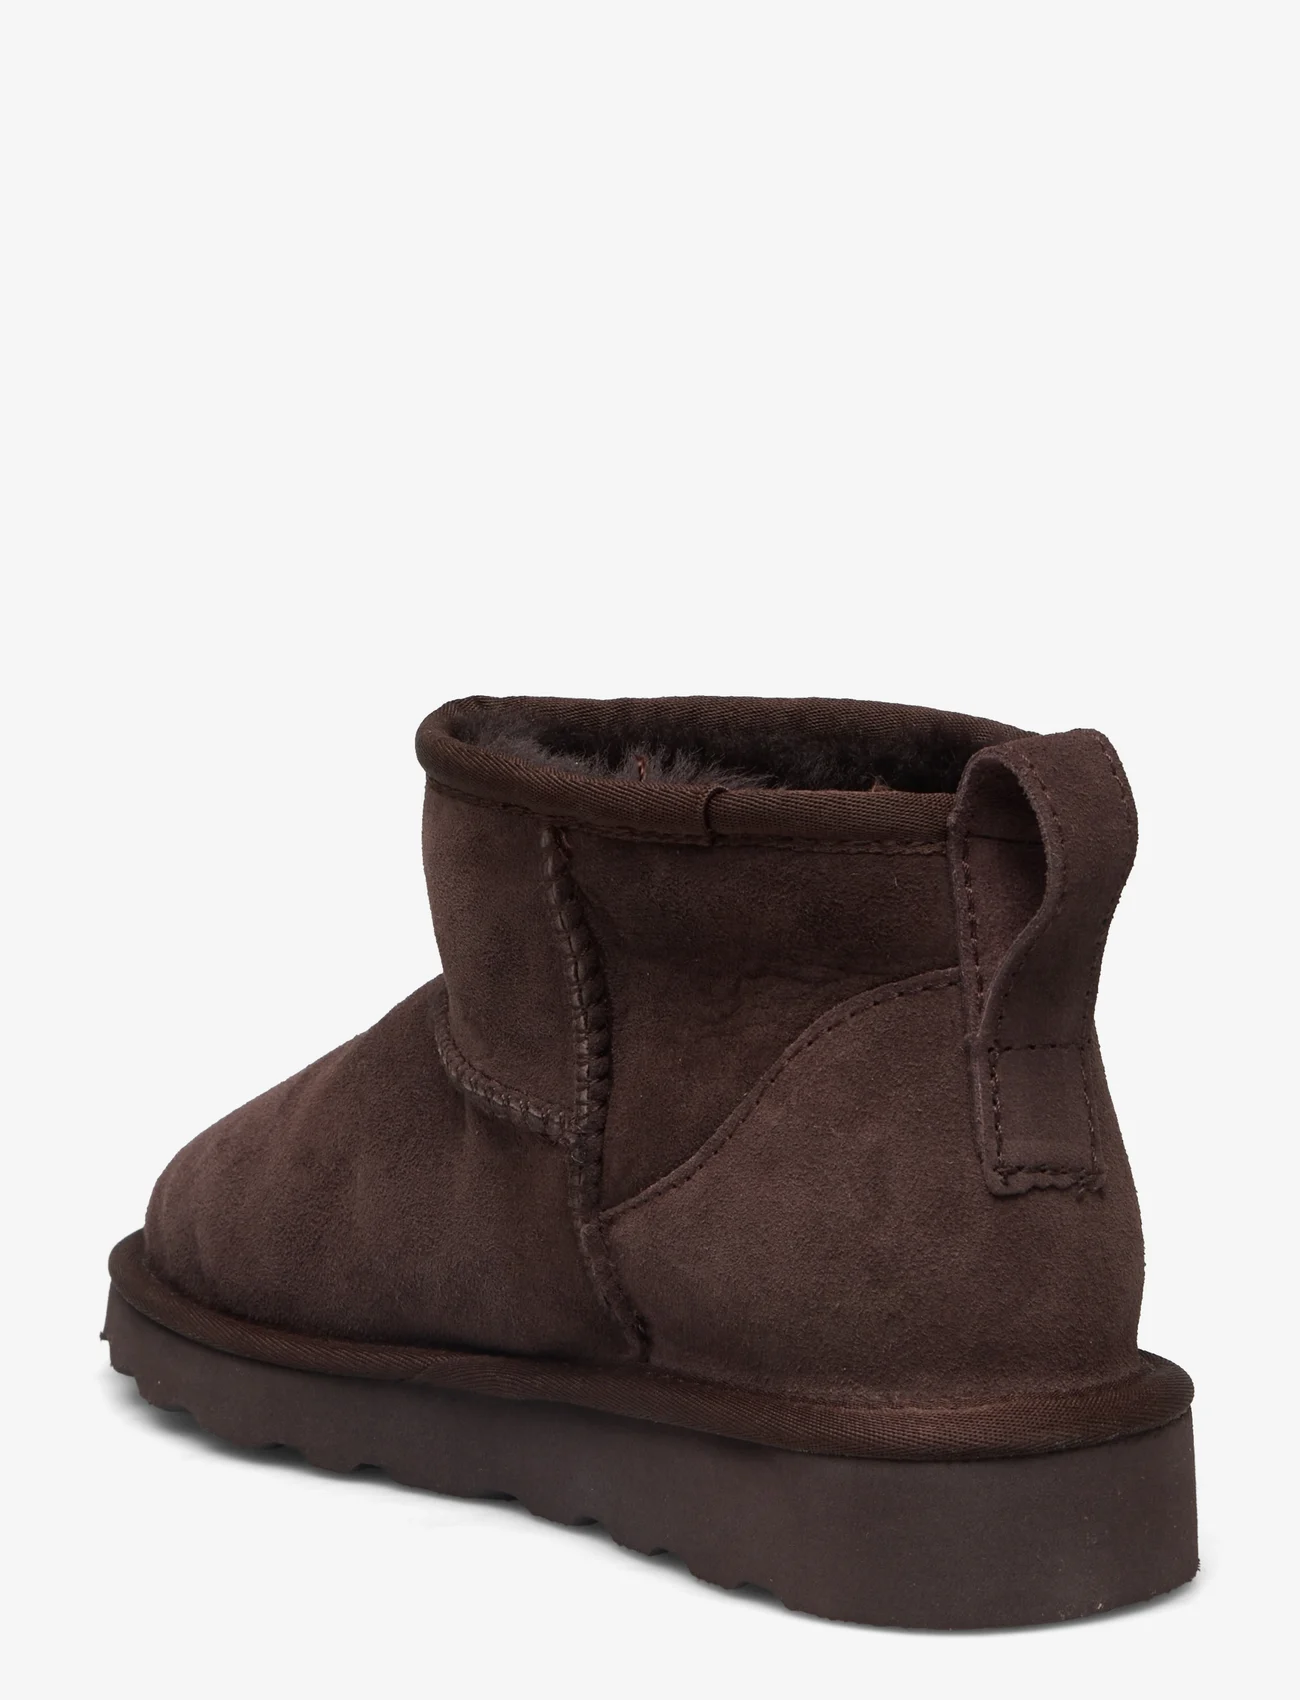 Rosemunde - Shearling boots - kvinder - coffee brown - 1